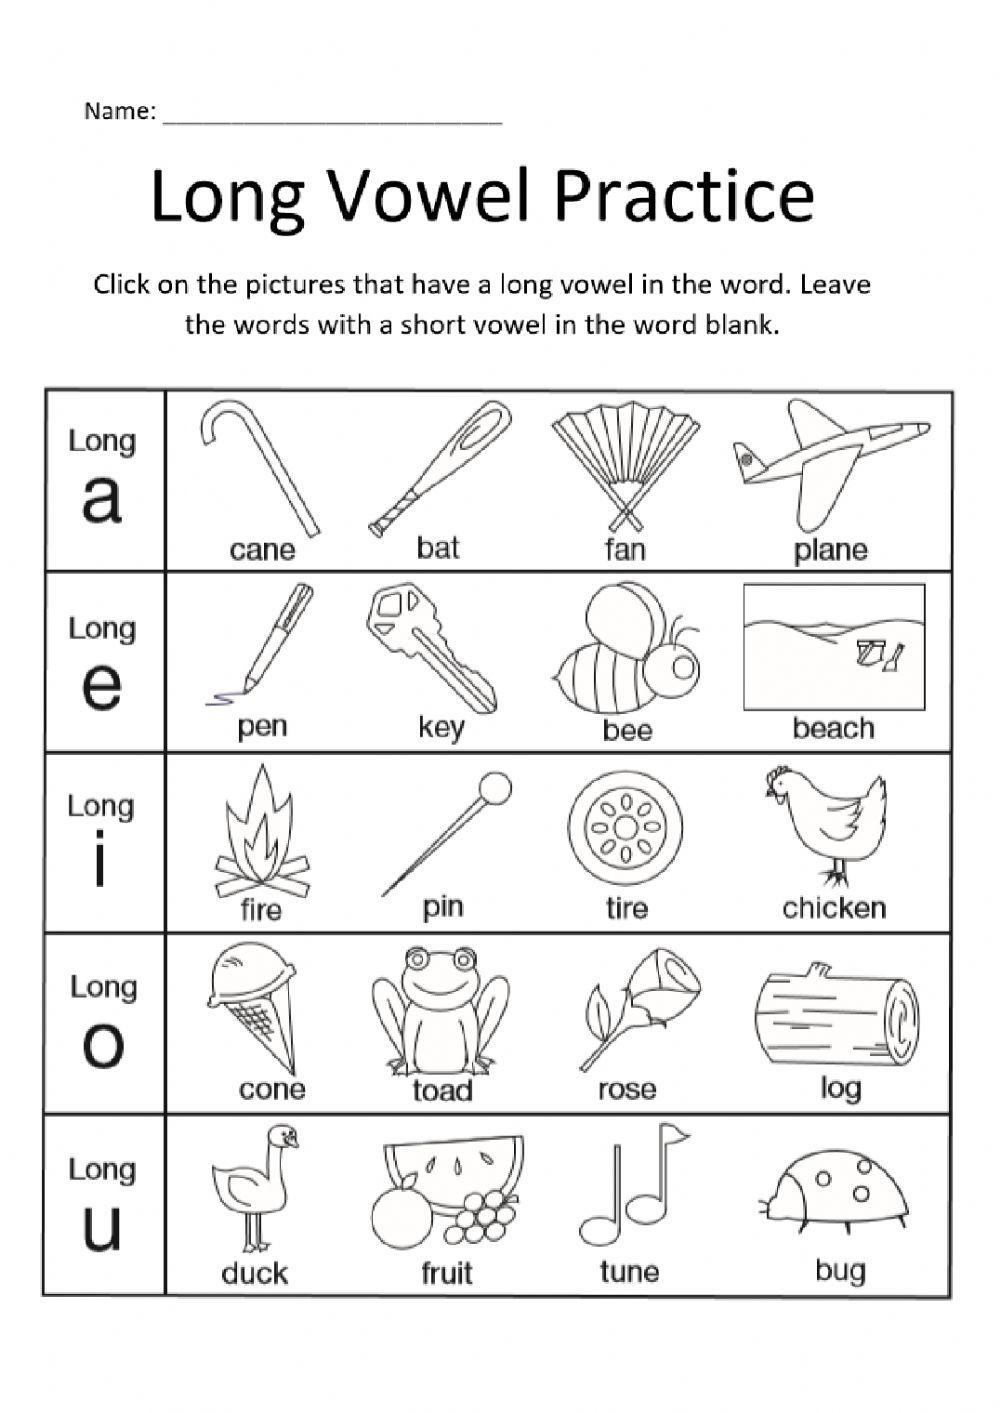 Long Vowel Practice